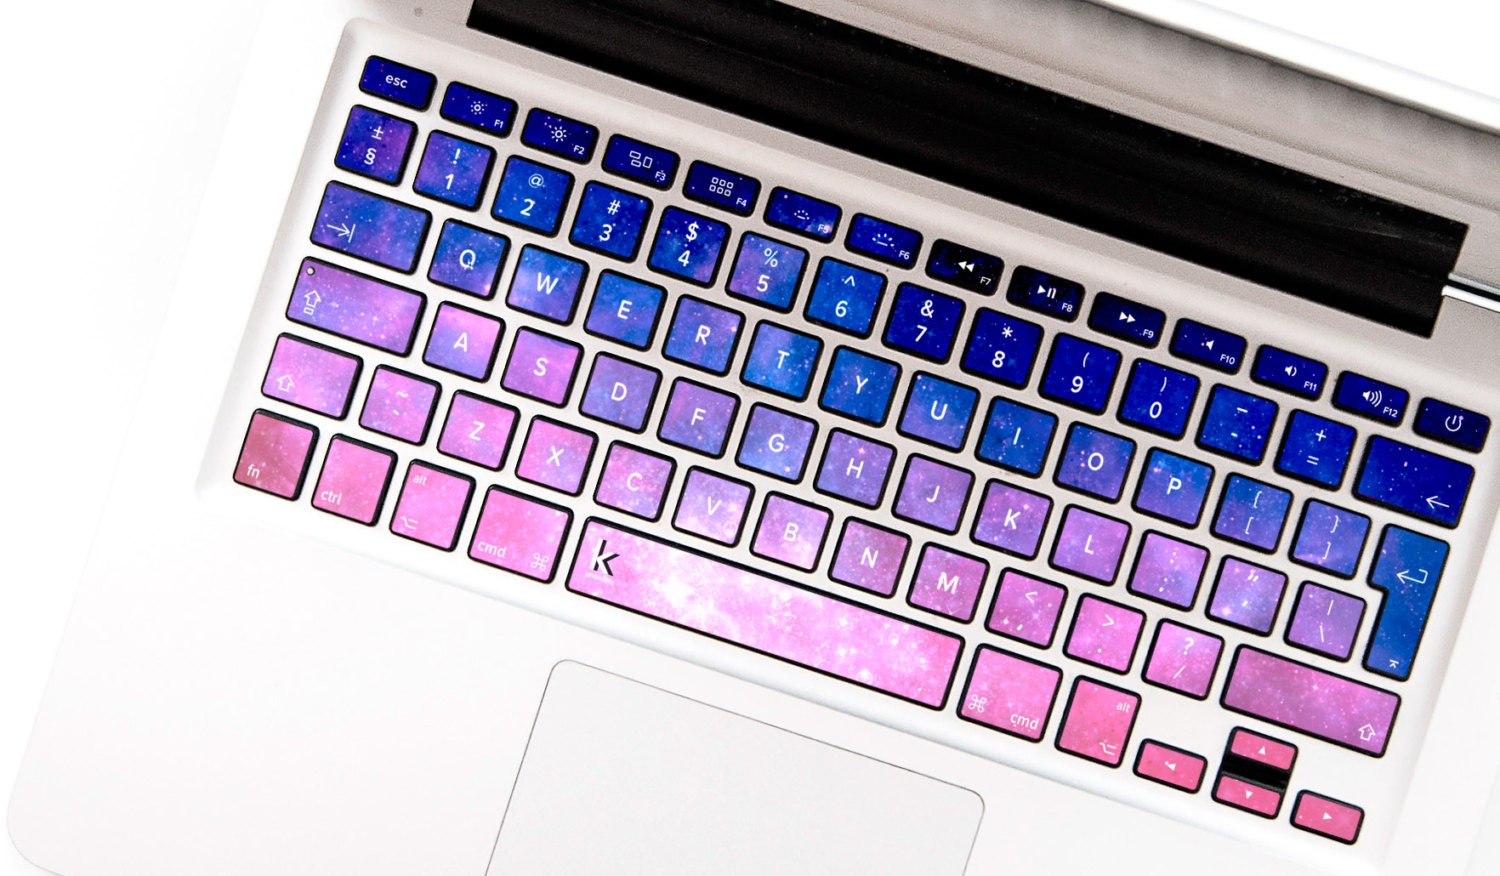 Macbook keyboard  stickers  Dell Macbook Decal Keyboard  by 